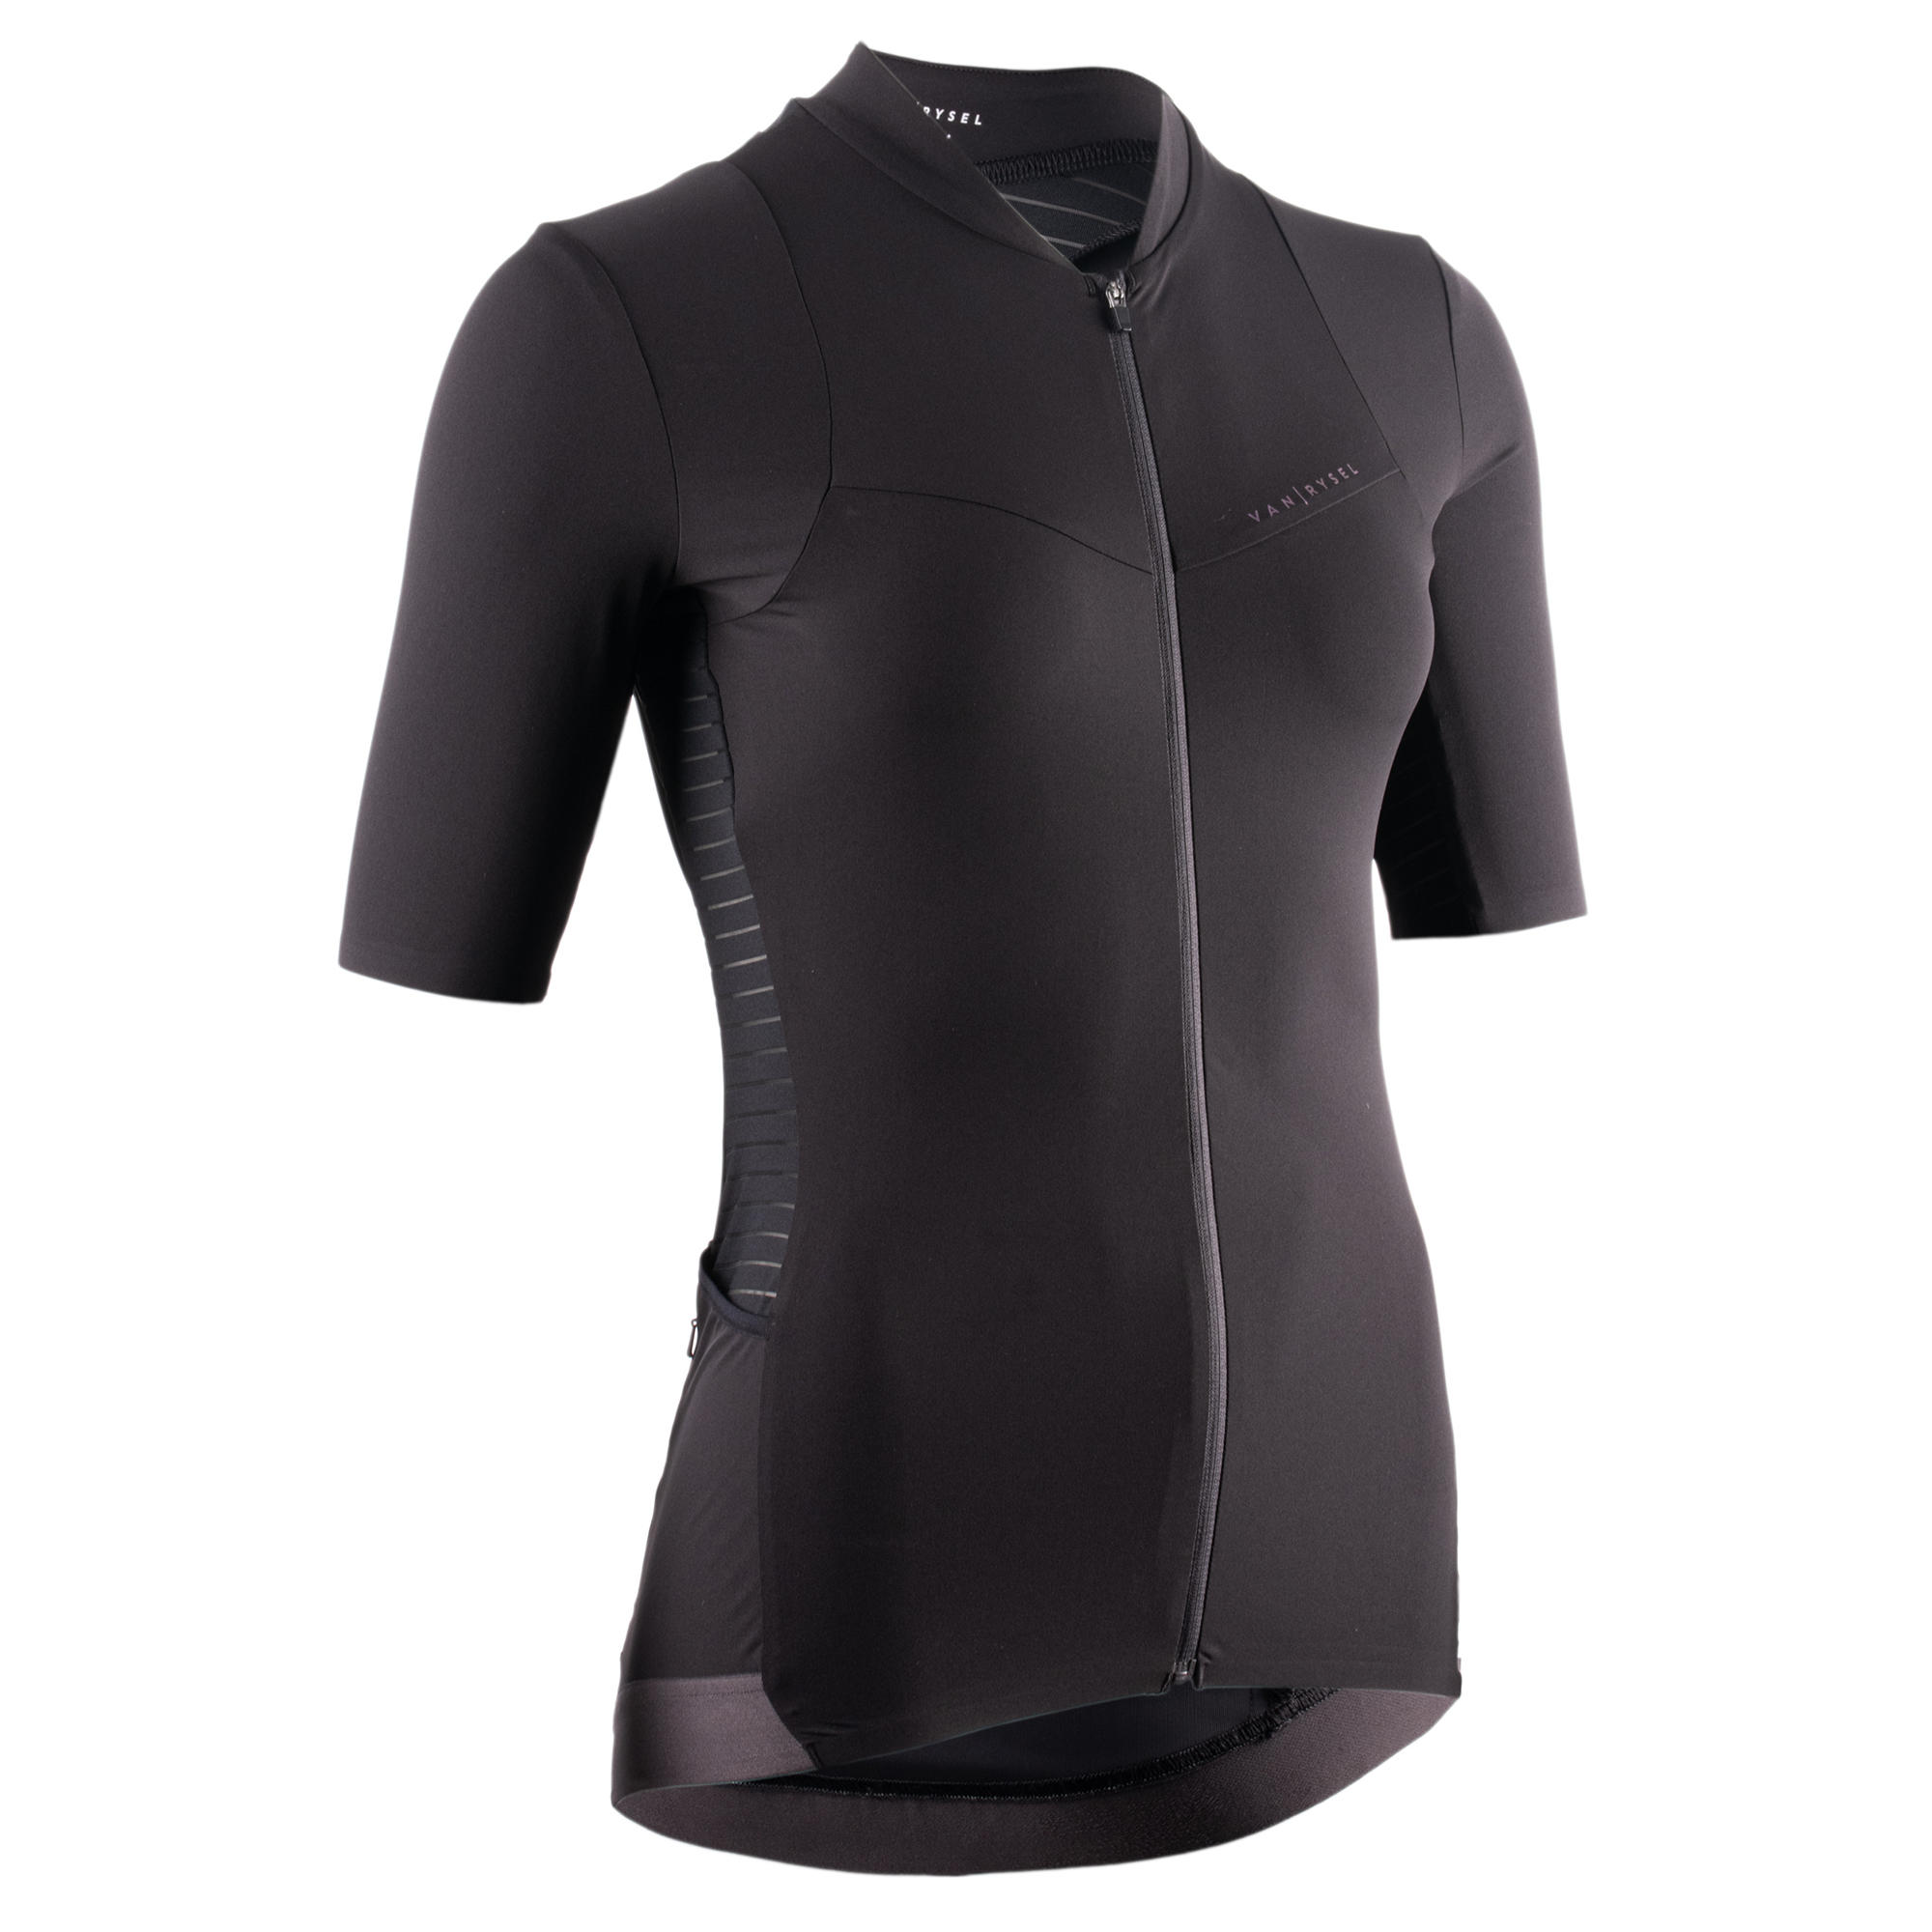 VAN RYSEL Women's Road Cycling Short-Sleeved Jersey Endurance - Black